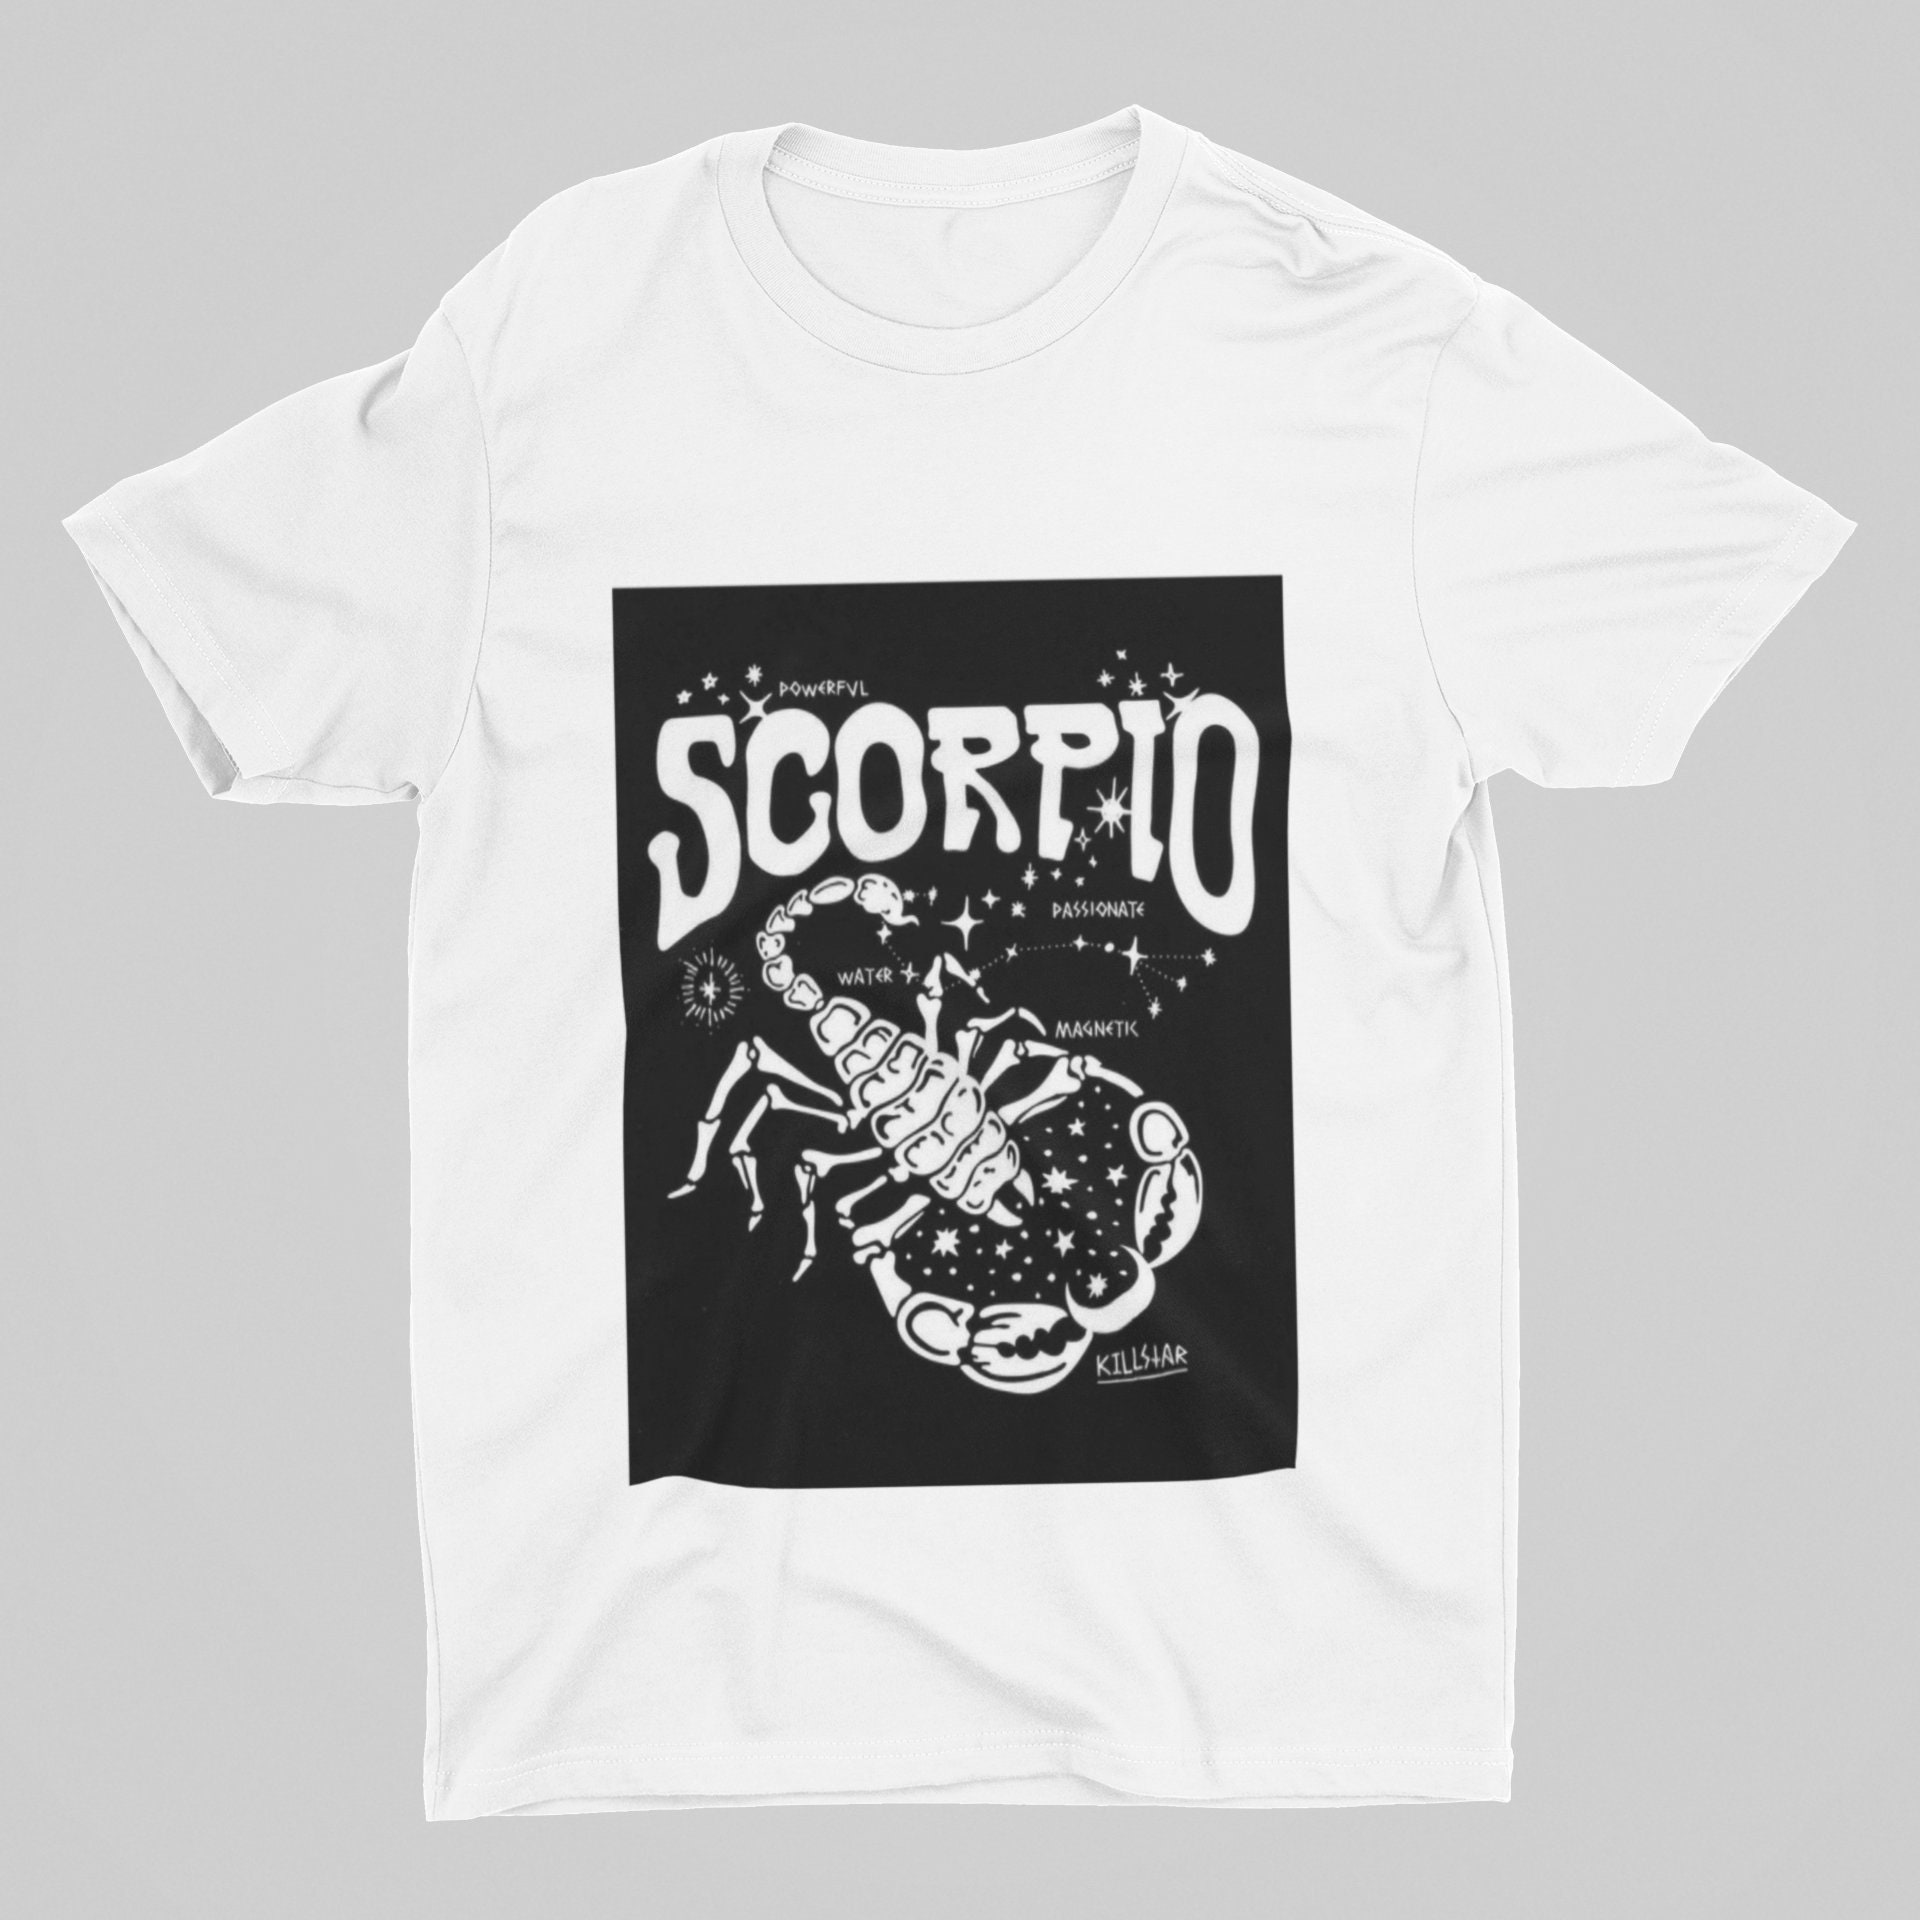 Discover Camiseta Scorpions Hard Rock Band Merch para Hombre Mujer